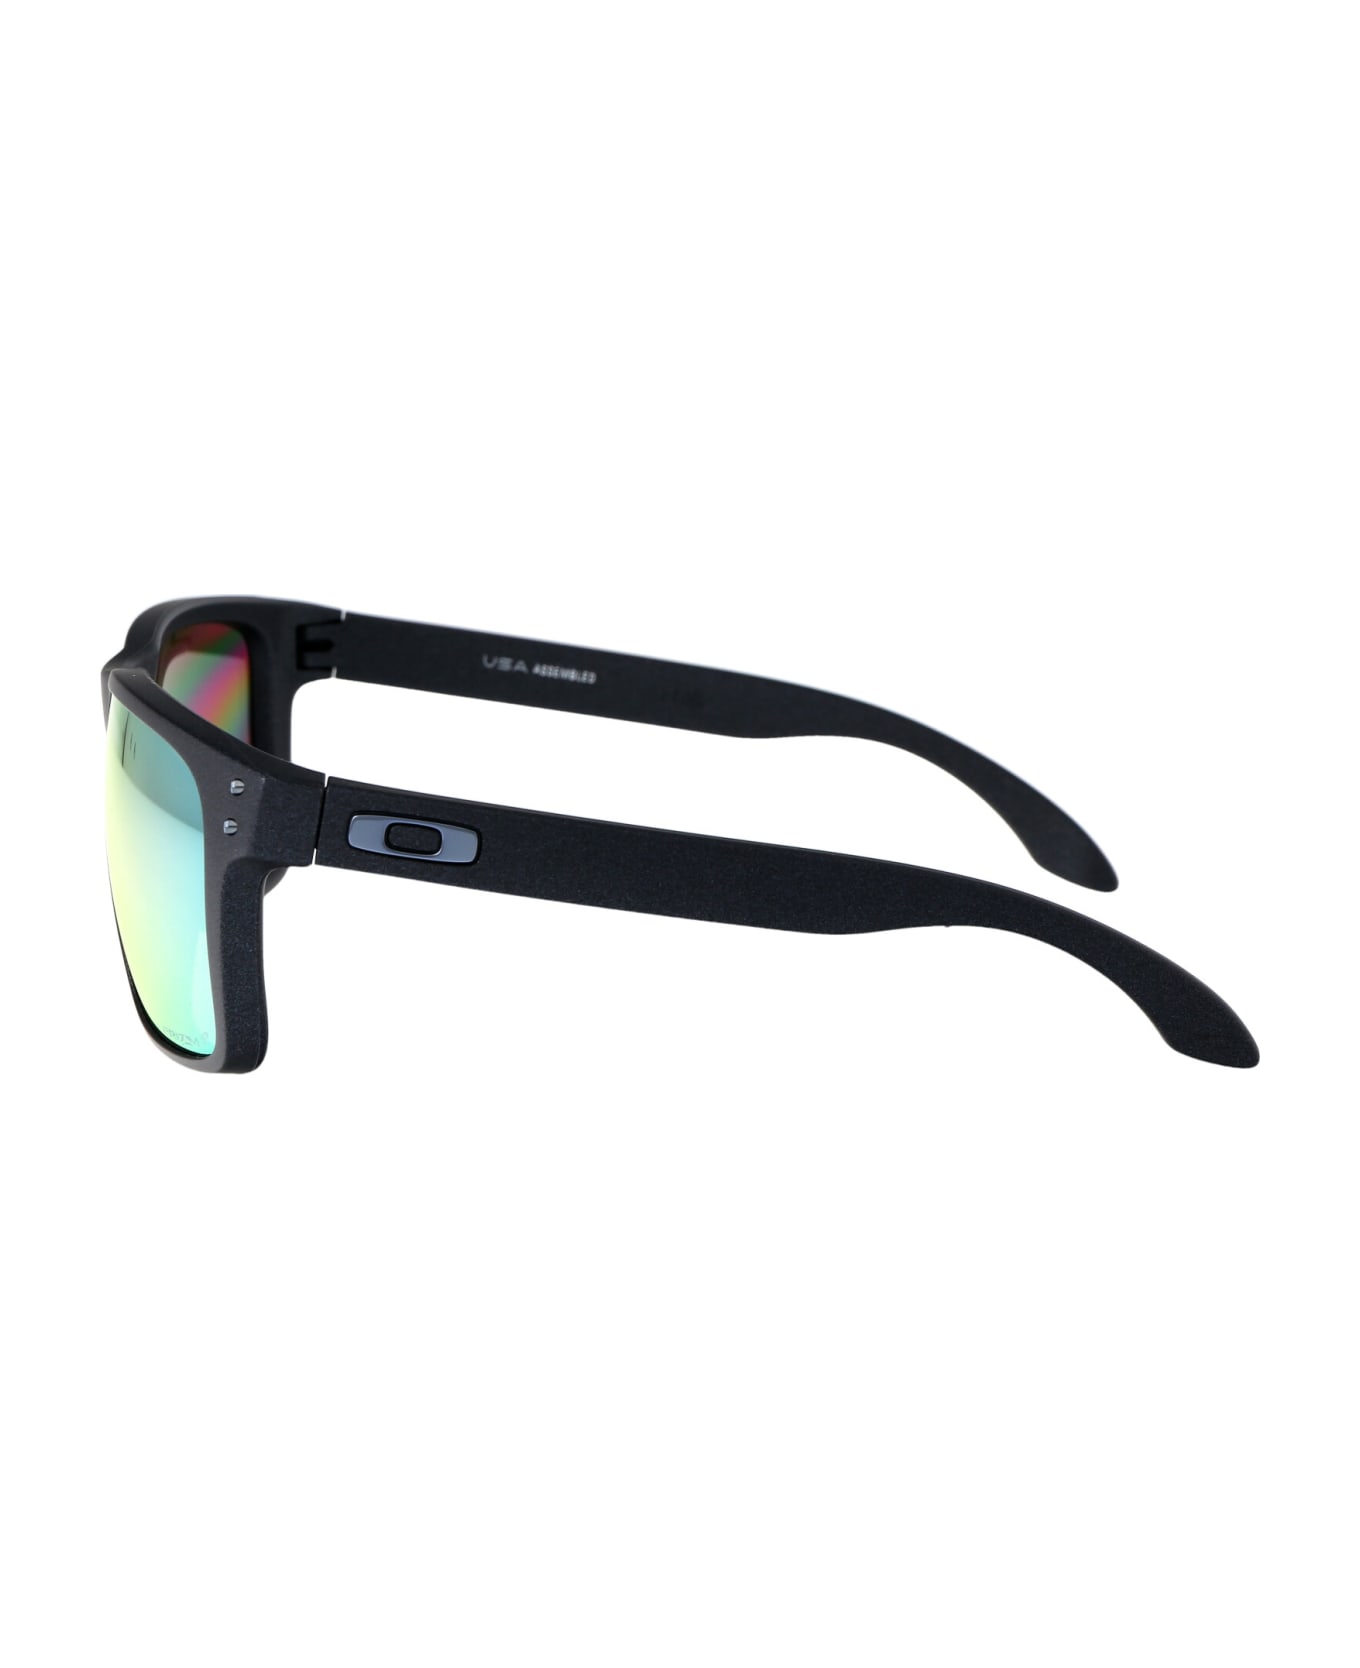 Oakley Holbrook Xl Sunglasses - Black